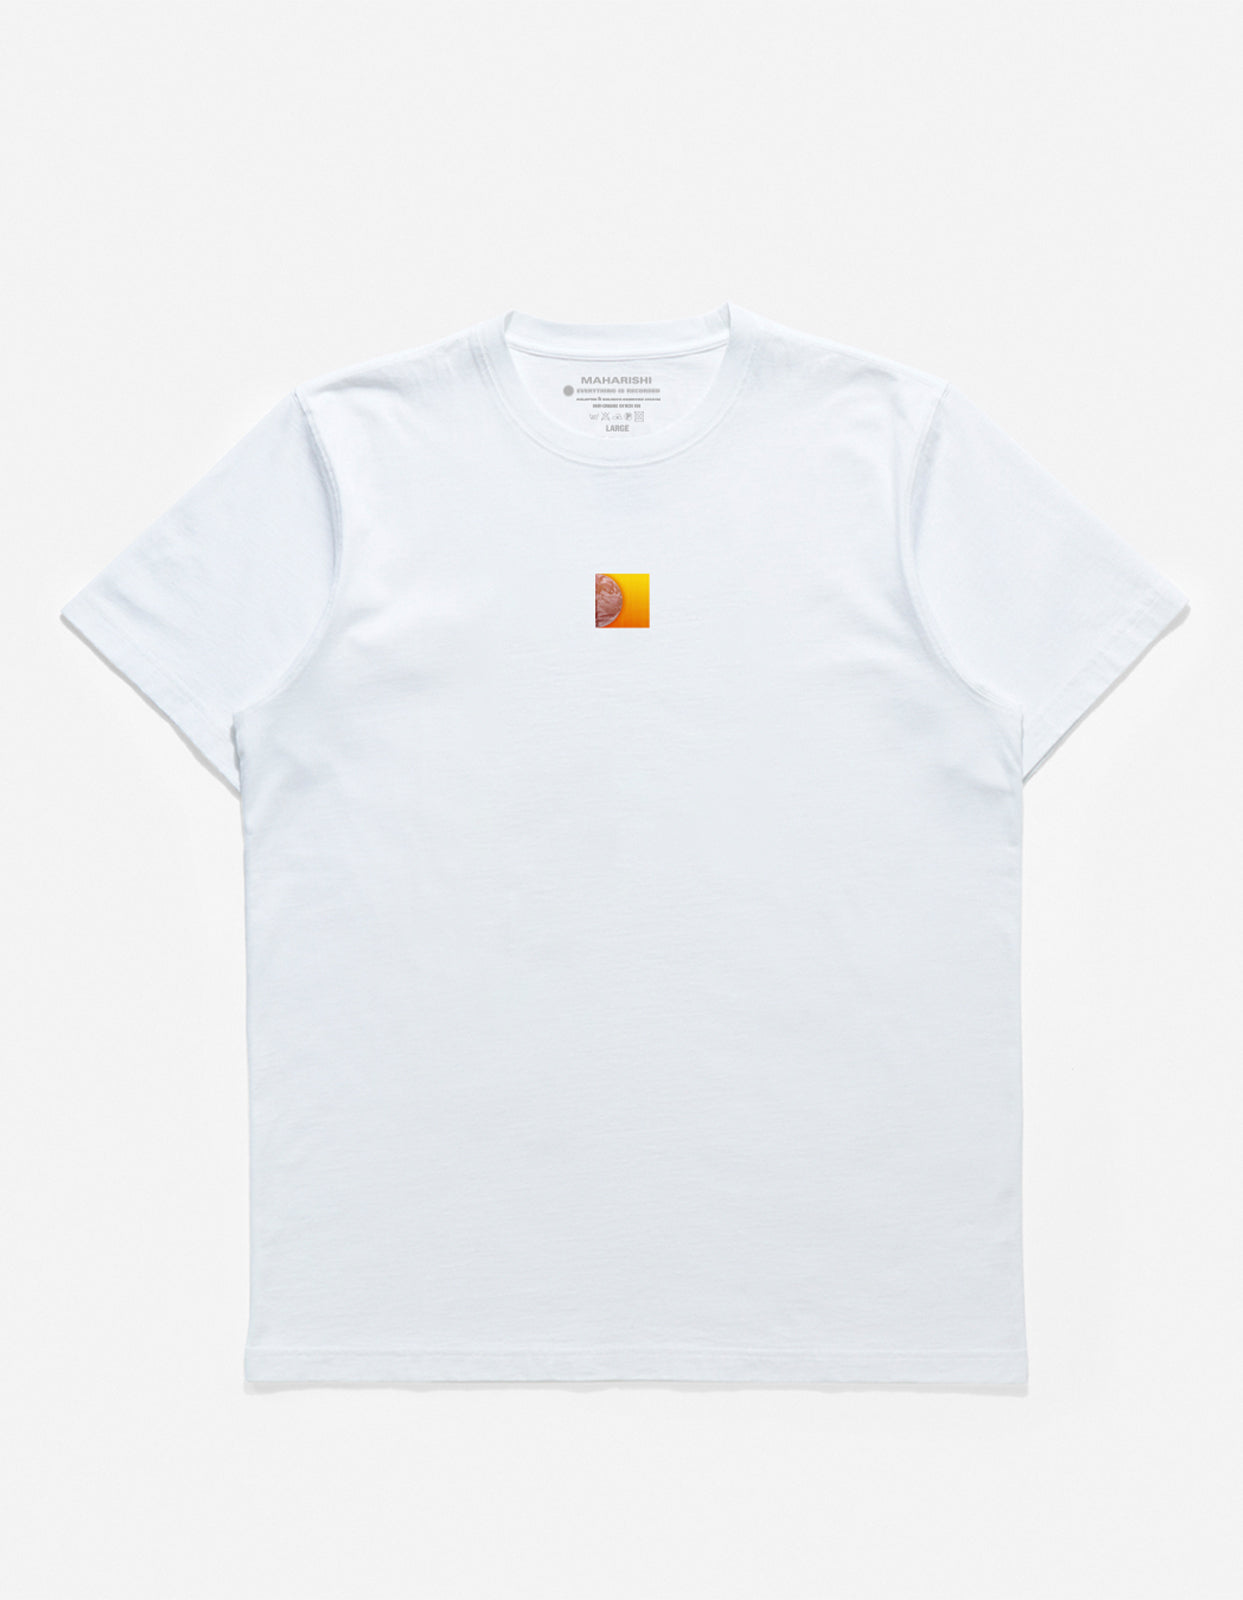 1316 Spring Equinox T-Shirt White